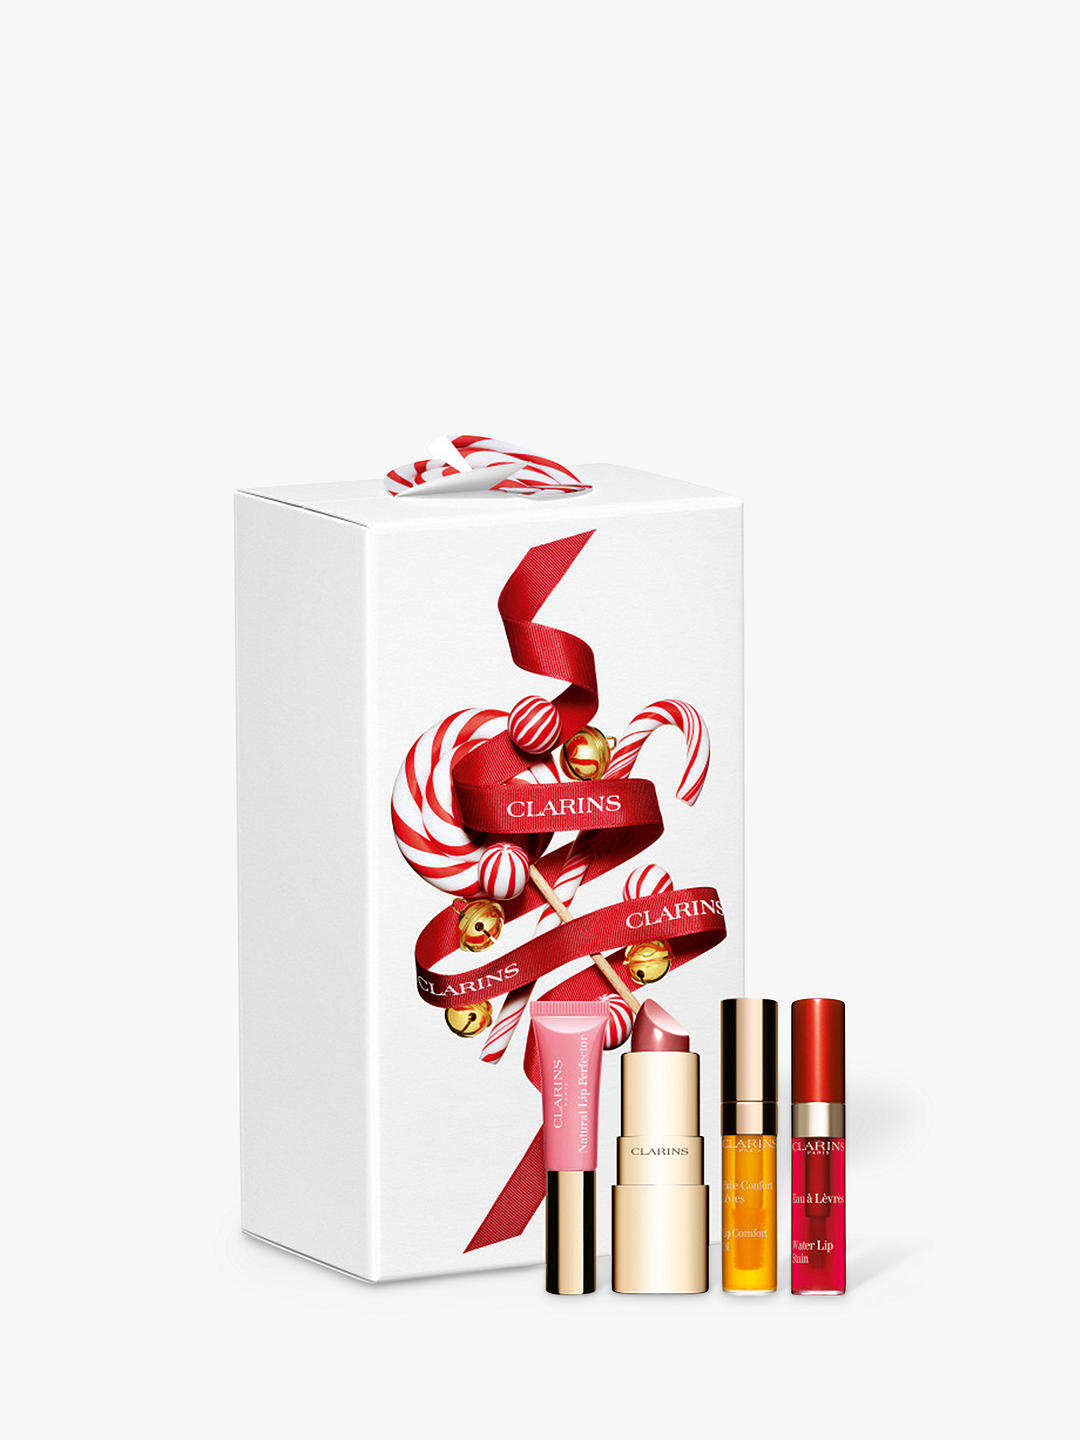 2 23 - Clarins Beautiful Lips Collection Makeup Gift Set